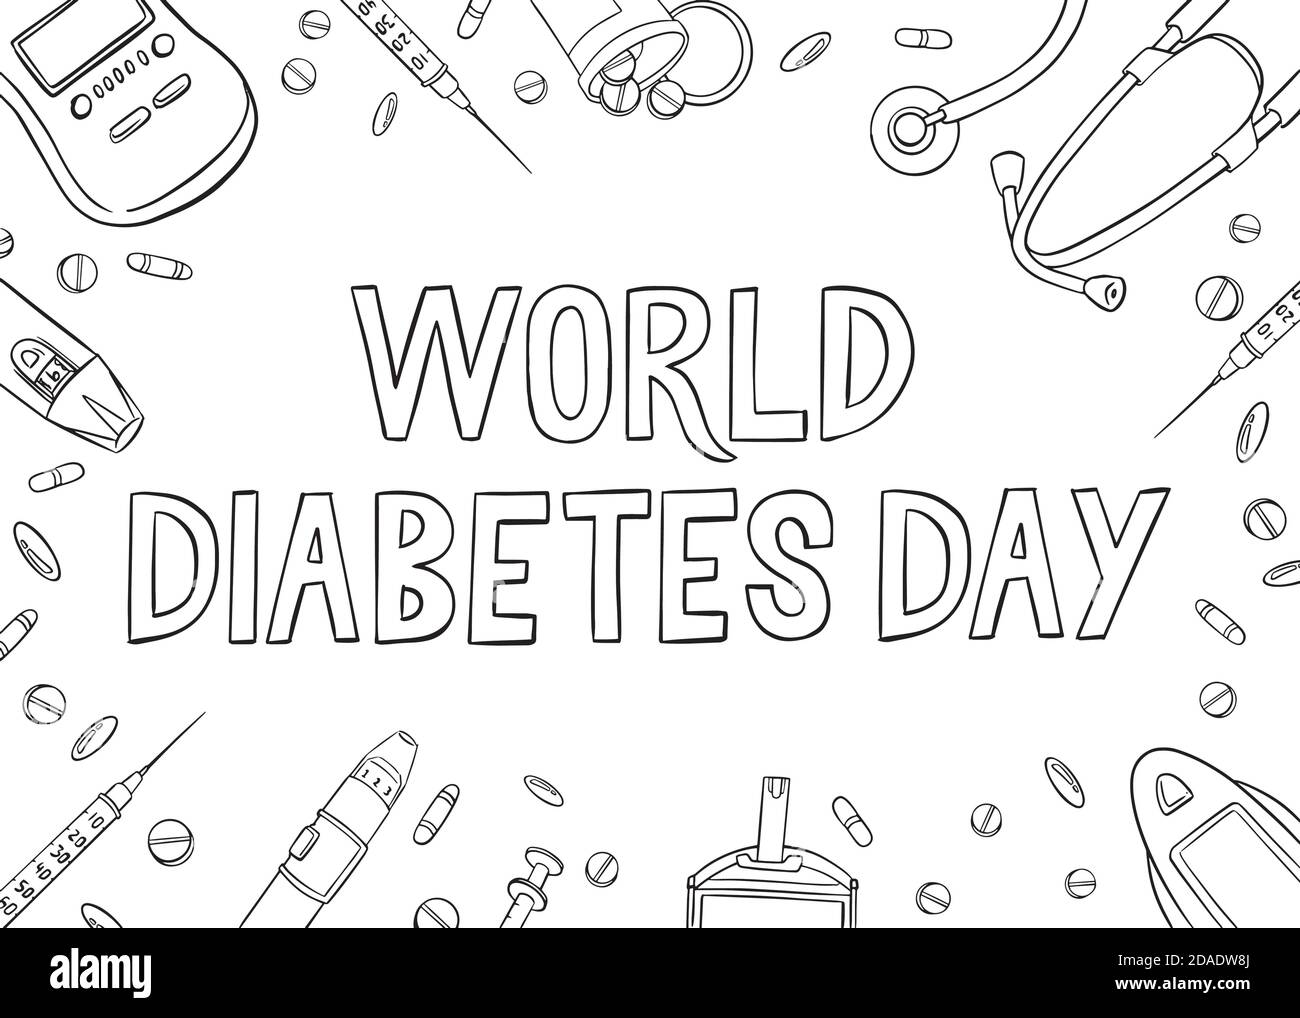 World Diabetes Day Flat Lay Doodle Konzept. Schwarz-Weiß-Vektorgrafik, Draufsicht Stock Vektor